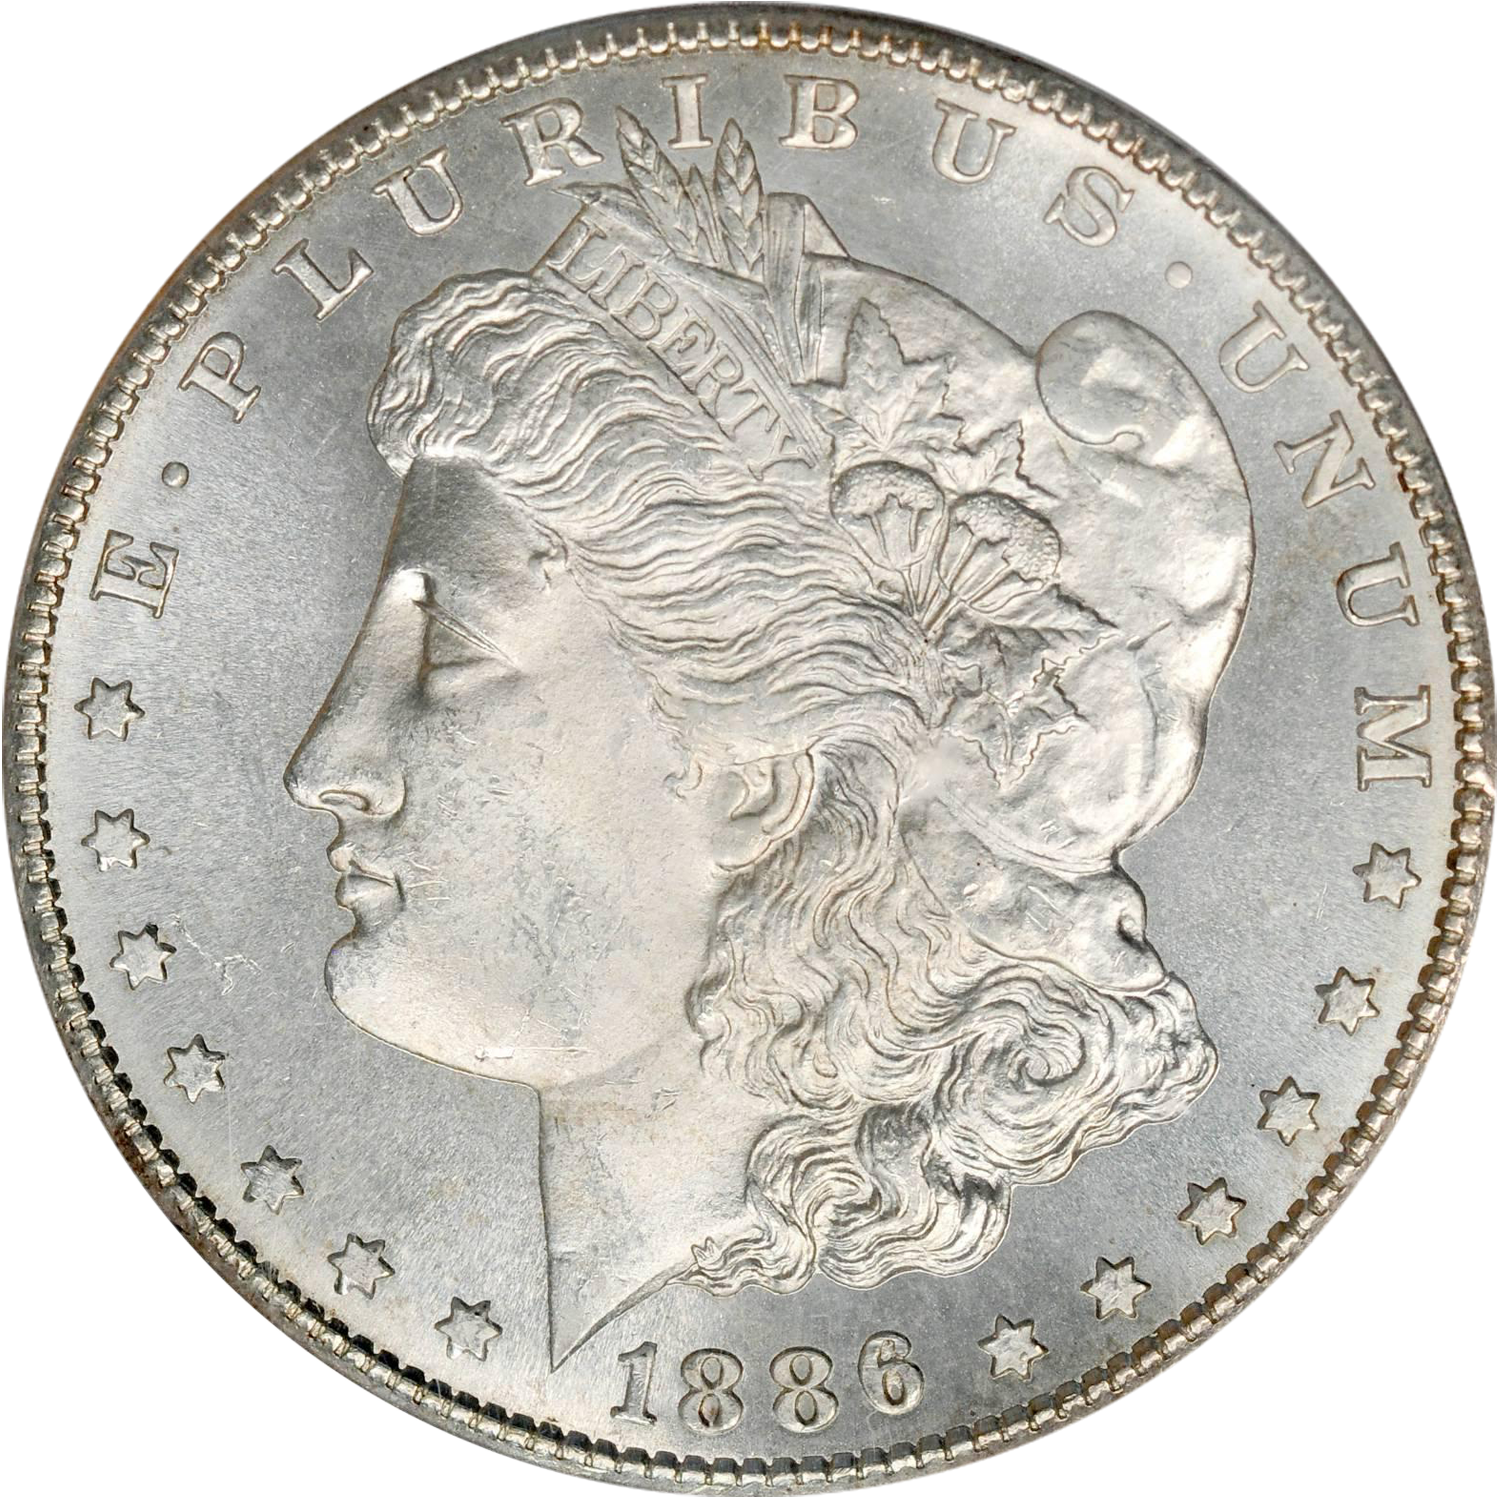 1886 s mint morgan dollar value guide